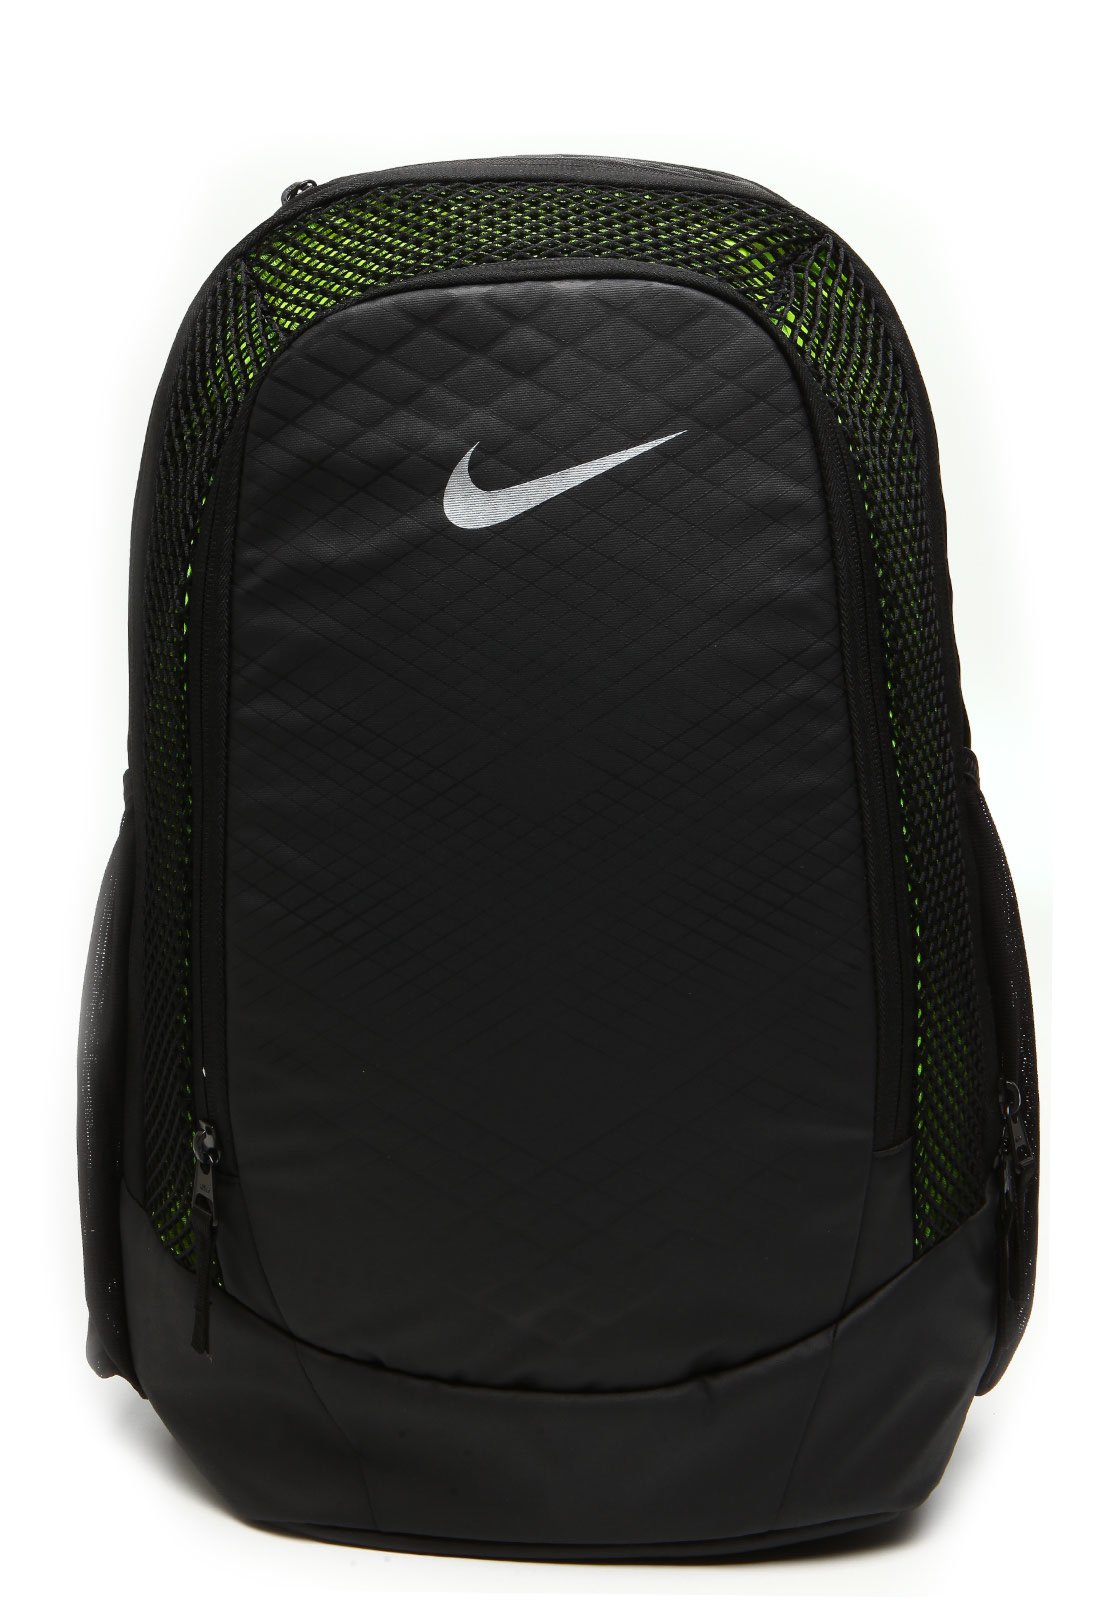 Mochila Nike Speed BP - Compre | Dafiti Brasil